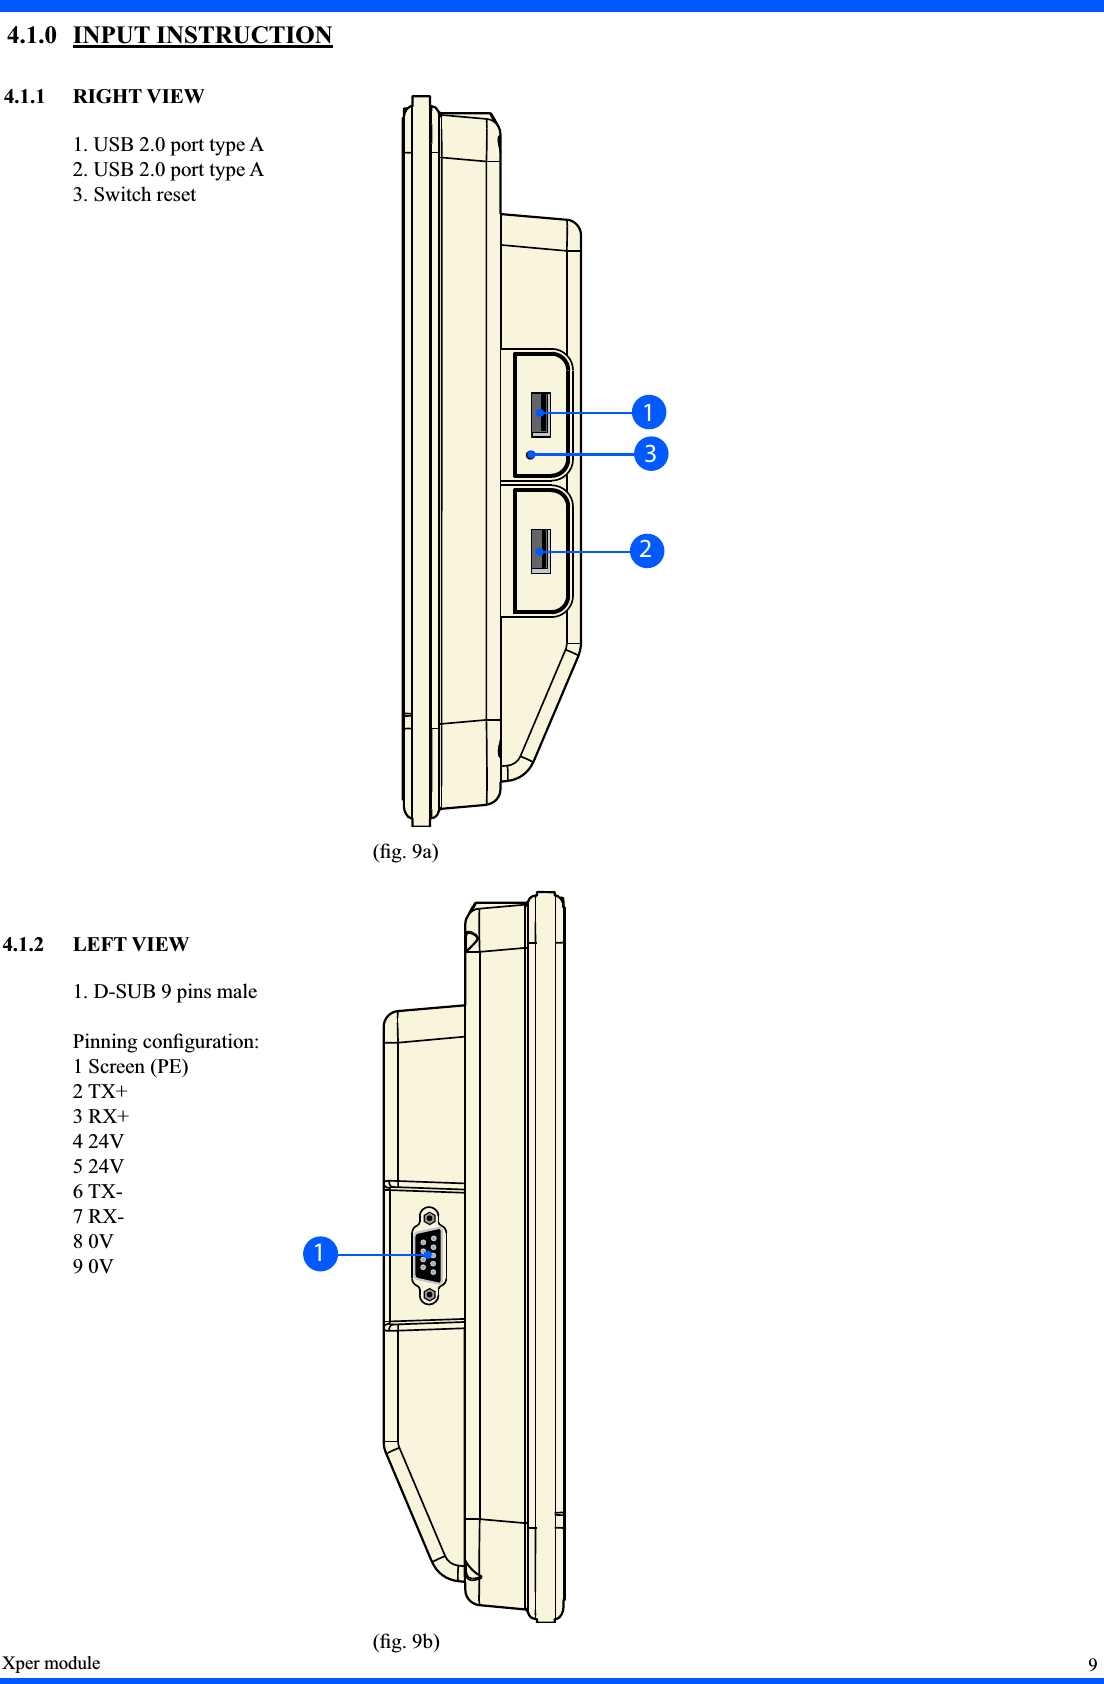 9Xper module 4.1.0 INPUT INSTRUCTION 4.1.1   RIGHT VIEW 1. USB 2.0 port type A  2. USB 2.0 port type A  3. Switch reset     (ﬁg. 9a) 4.1.2   LEFT VIEW 1. D-SUB 9 pins male  Pinning conﬁguration:  1 Screen (PE) 2 TX+ 3 RX+ 4 24V 5 24V 6 TX- 7 RX- 8 0V 9 0V     (ﬁg. 9b)1231